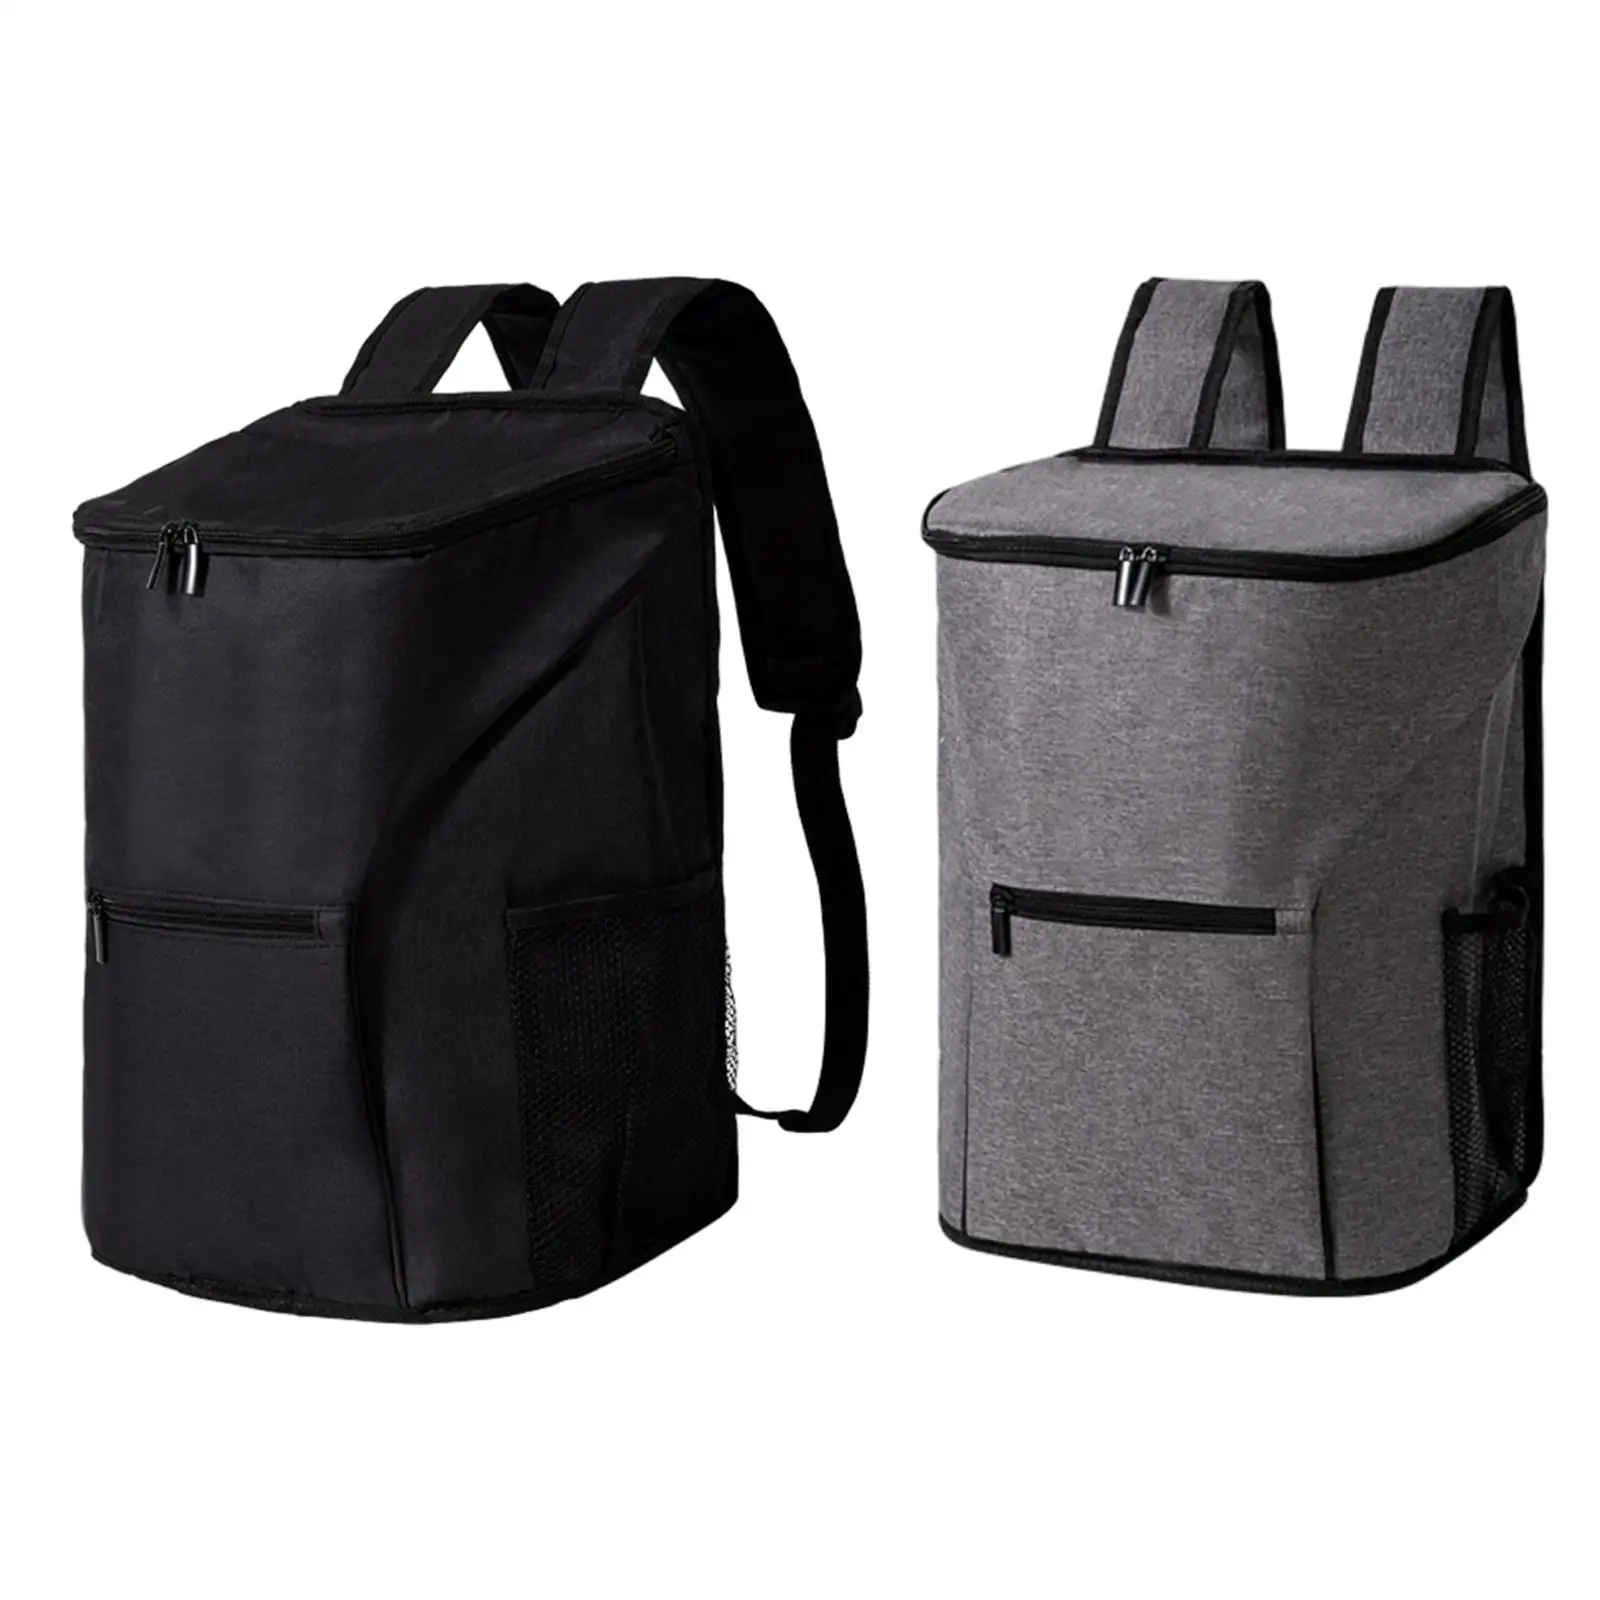 Thermal Backpack, Large Insulated Cooler Bag, Men Women Lightweight Waterproof